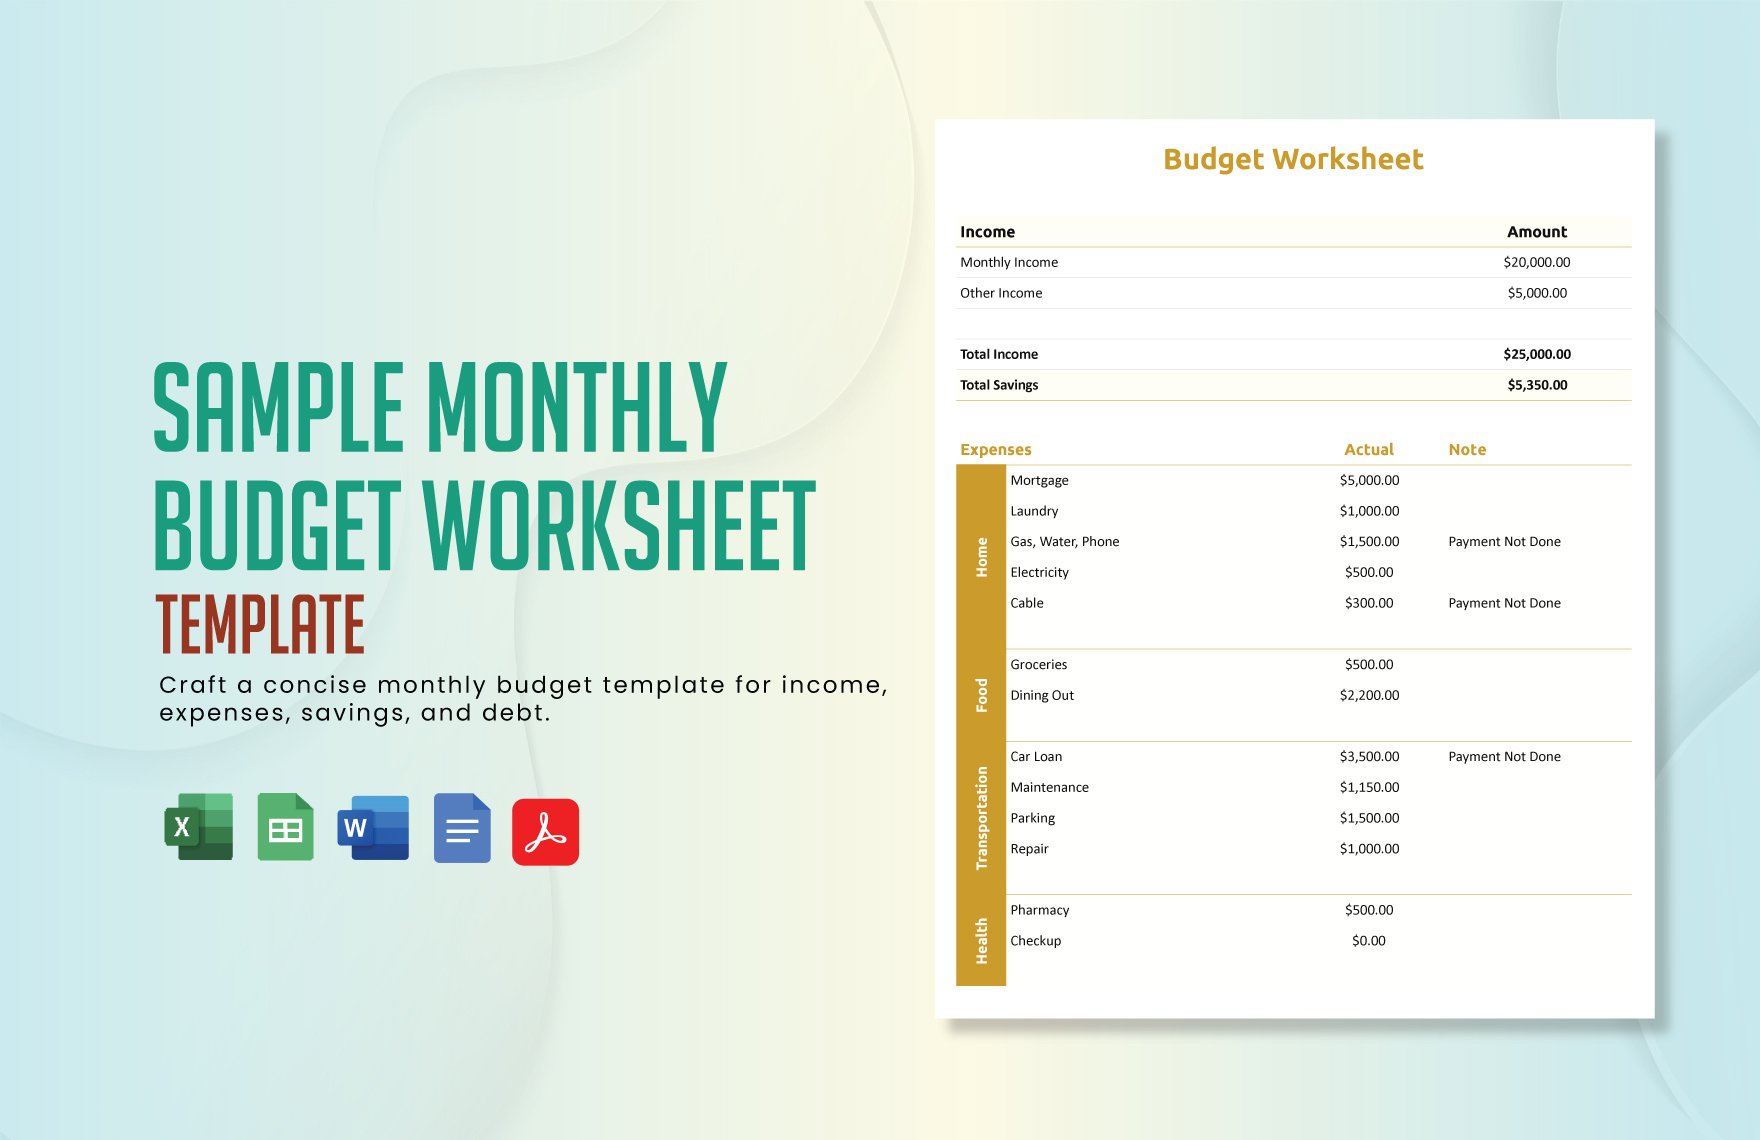 Sample Monthly Budget Worksheet Template in Word, Google Docs, Excel, PDF, Google Sheets